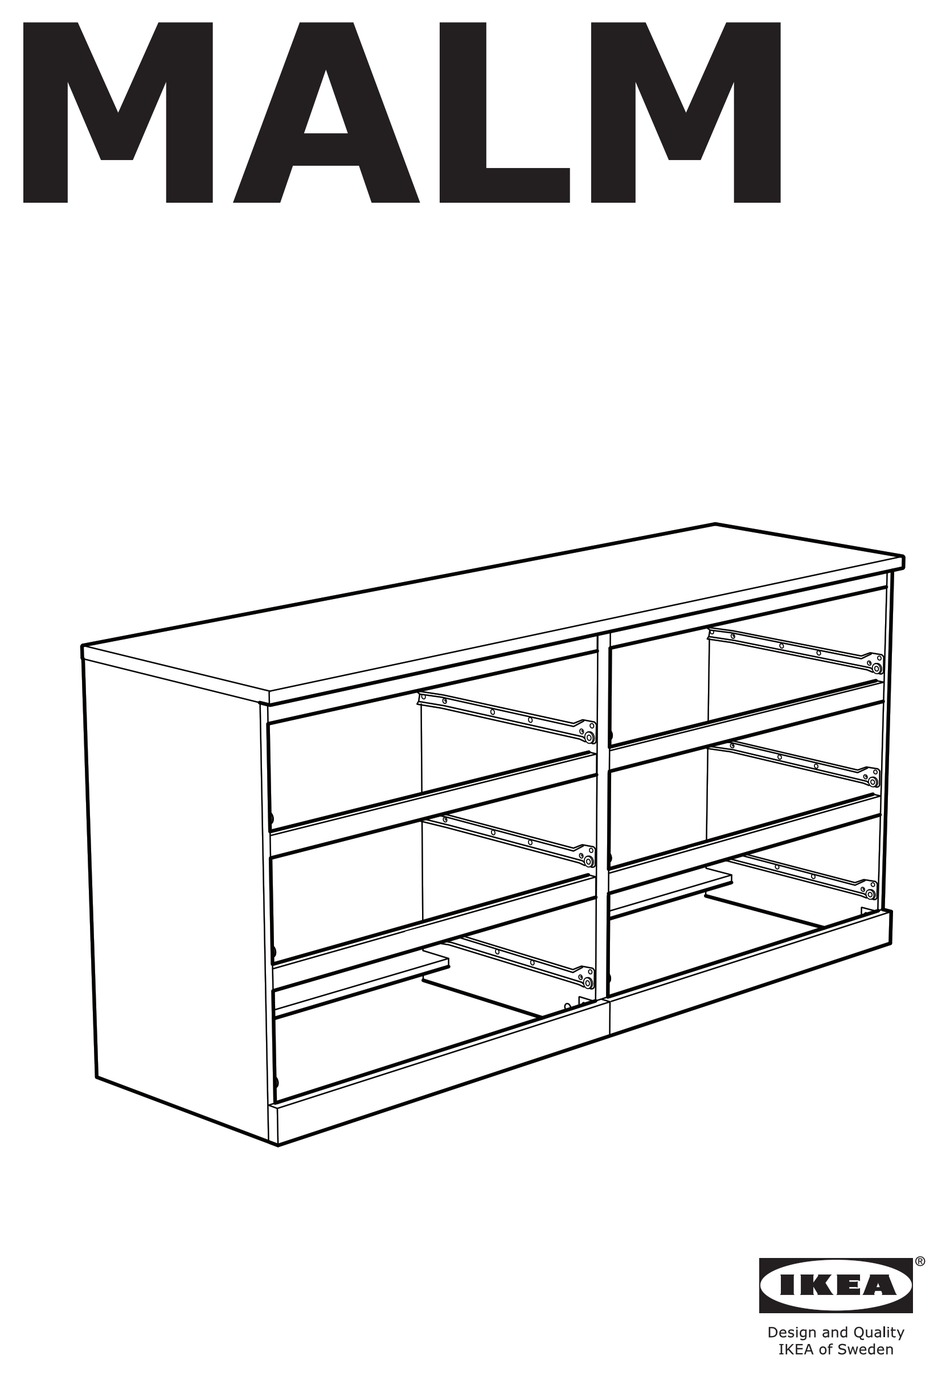 Ikea Malm Manual Pdf Manualslib, Malm 6 Drawer Dresser Assembly Instructions